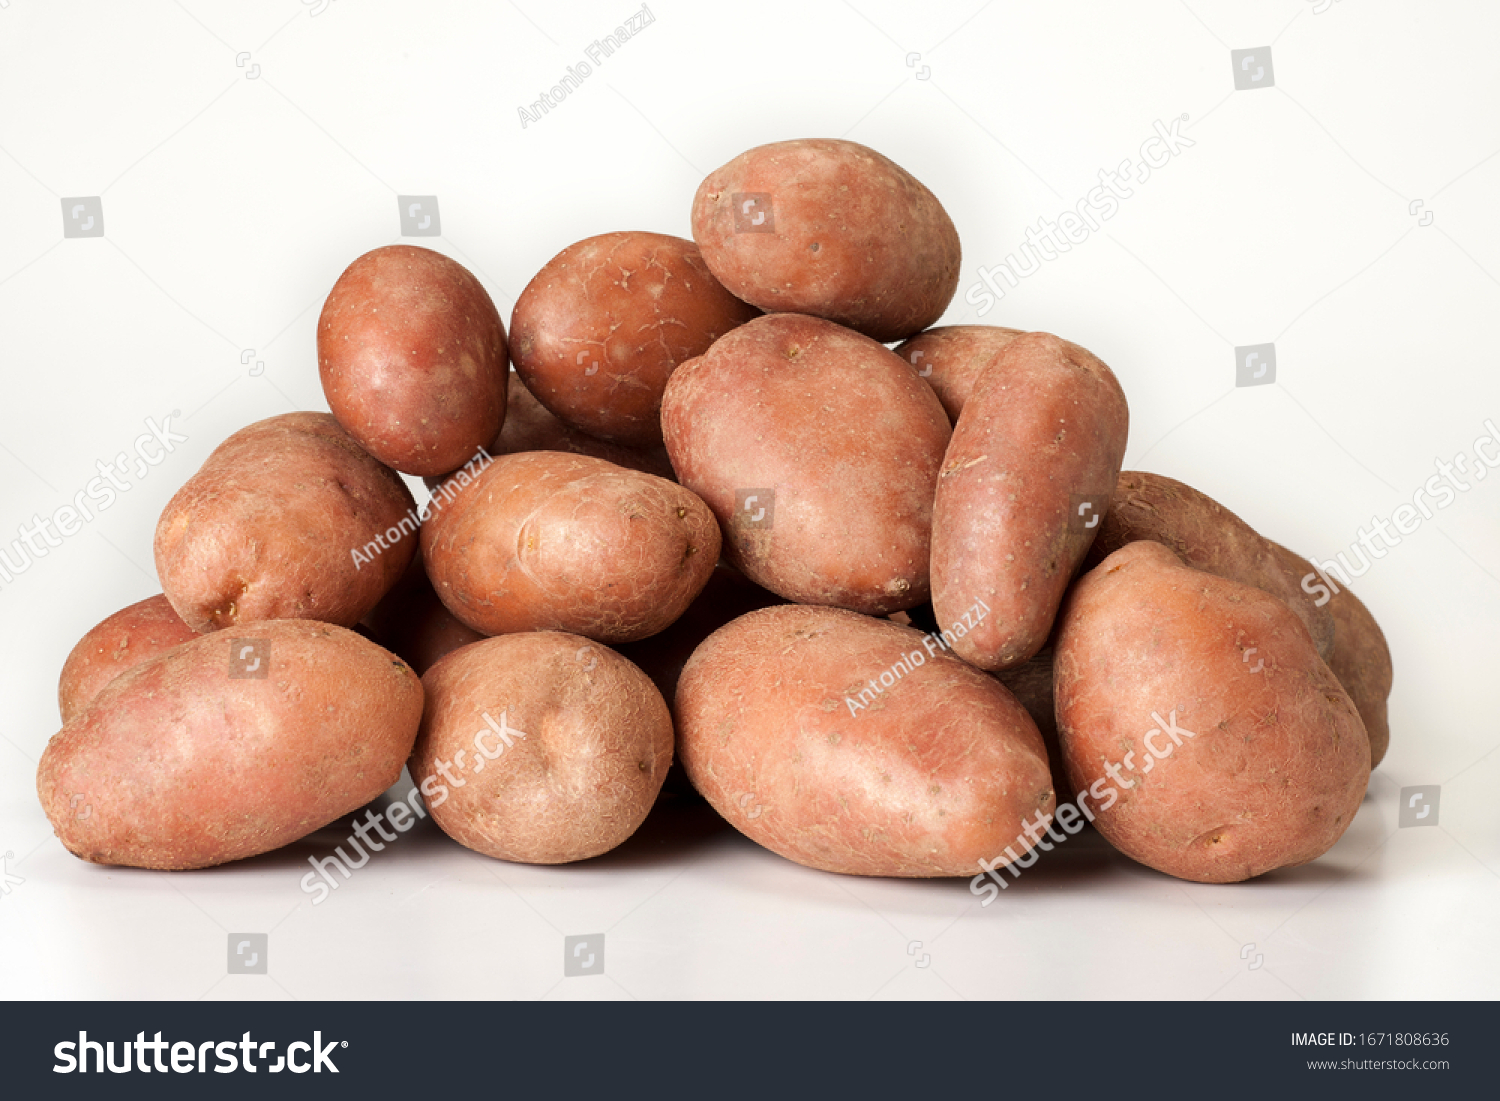 Mountain potato Images, Stock Photos & Vectors | Shutterstock